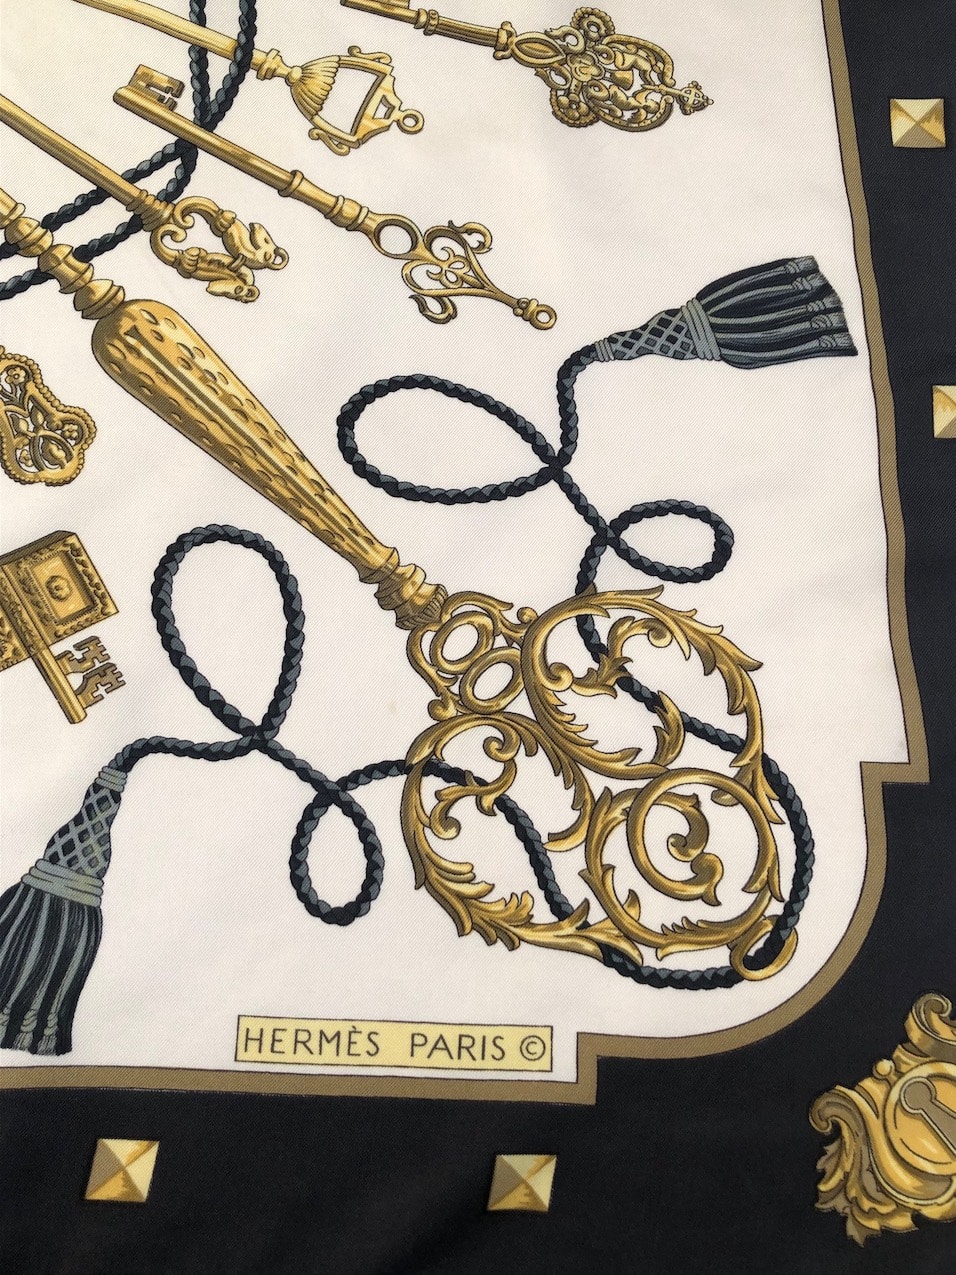 HERMÈS Vintage Silk Scarf Les Clefs By Caty Latham Black Gold W/Box